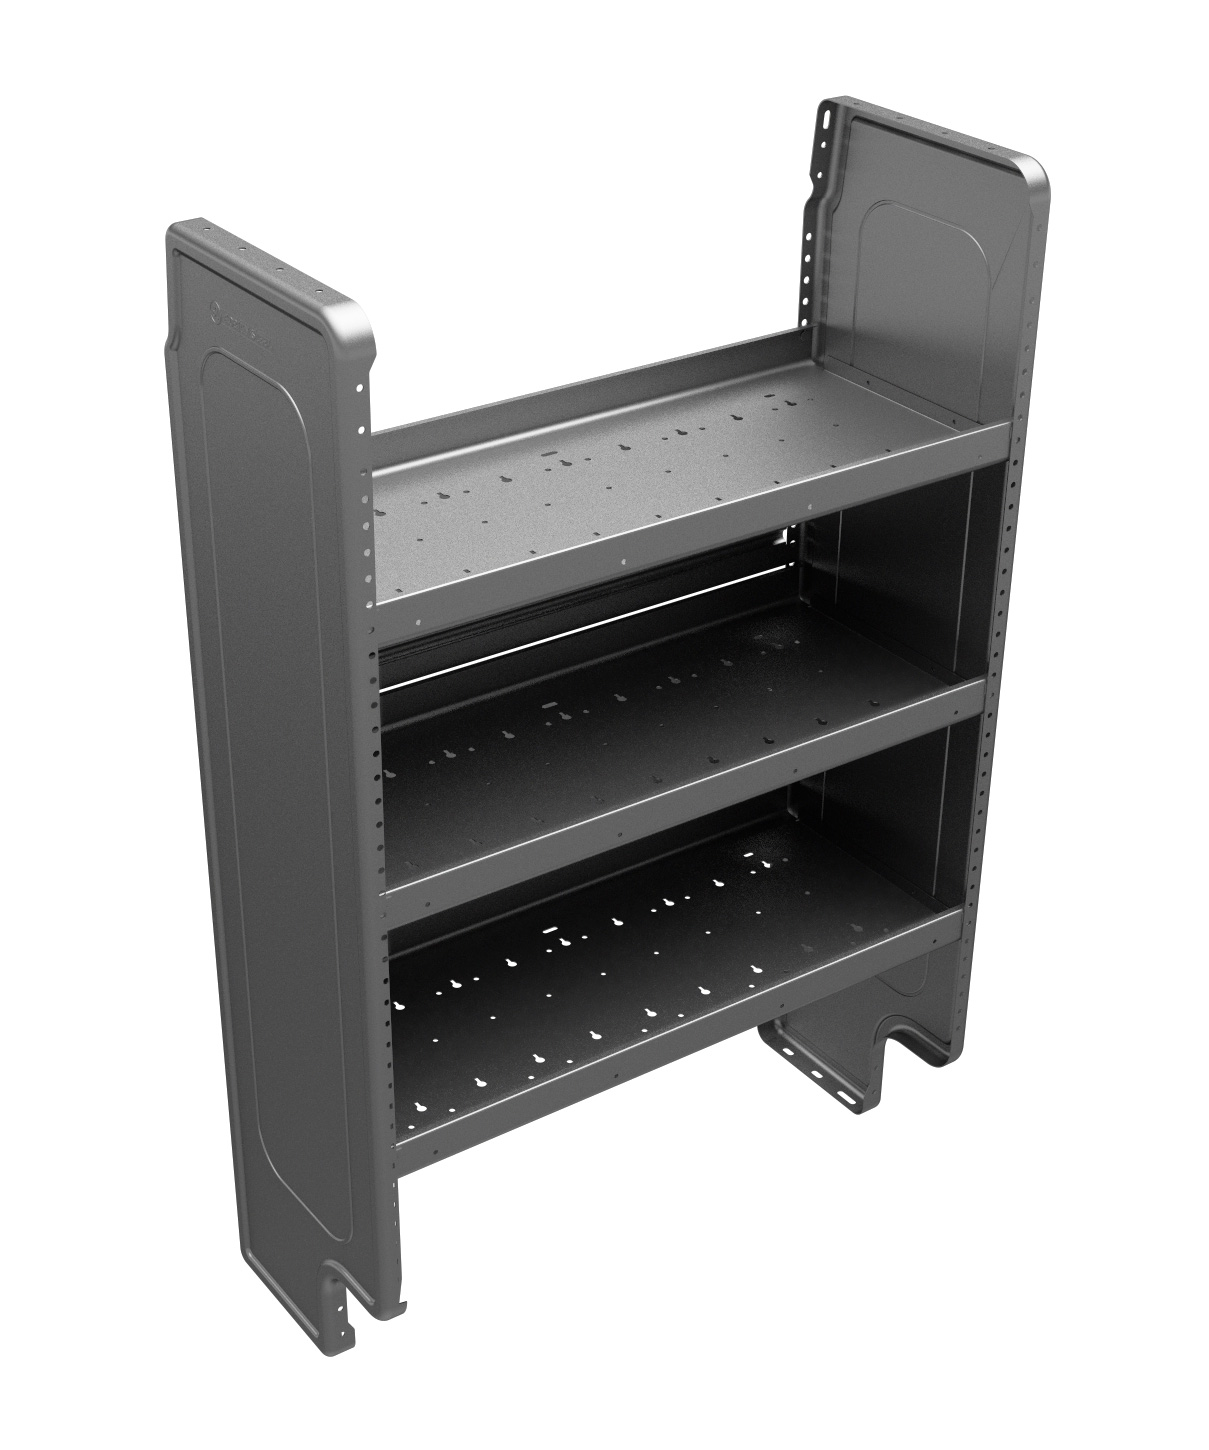 Adjustable 3-Shelf Unit